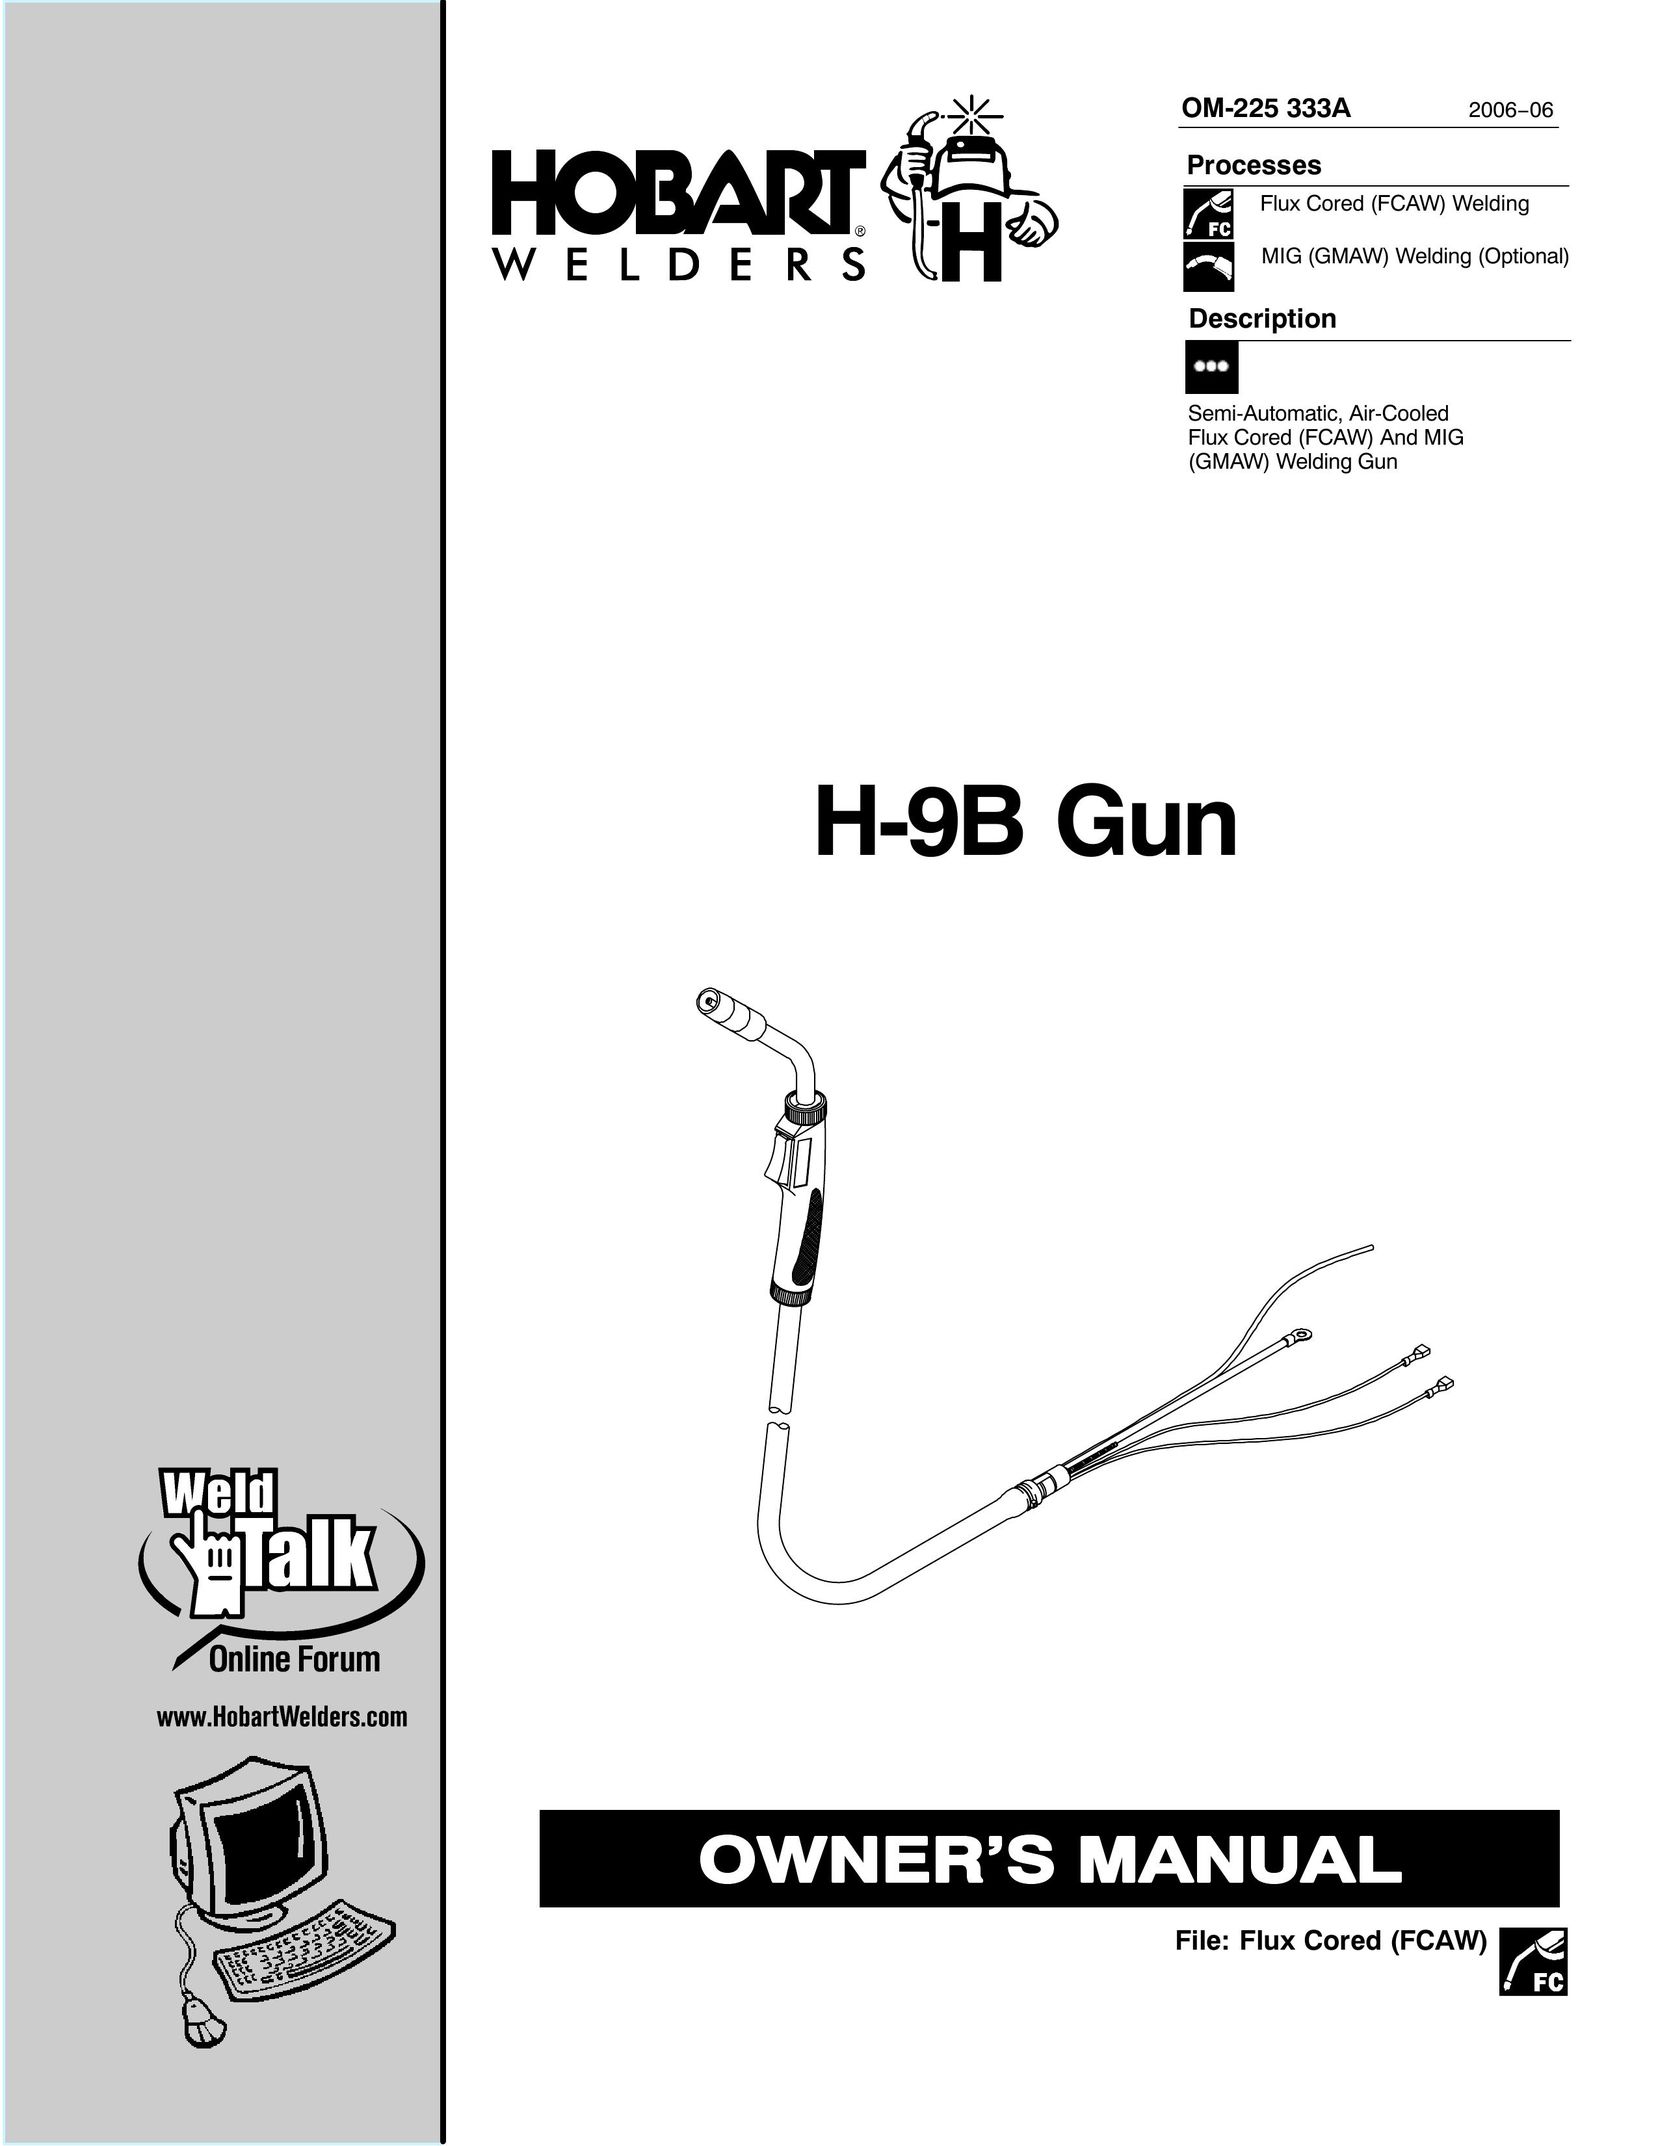 Hobart Welding Products H-9B Gun Welder User Manual